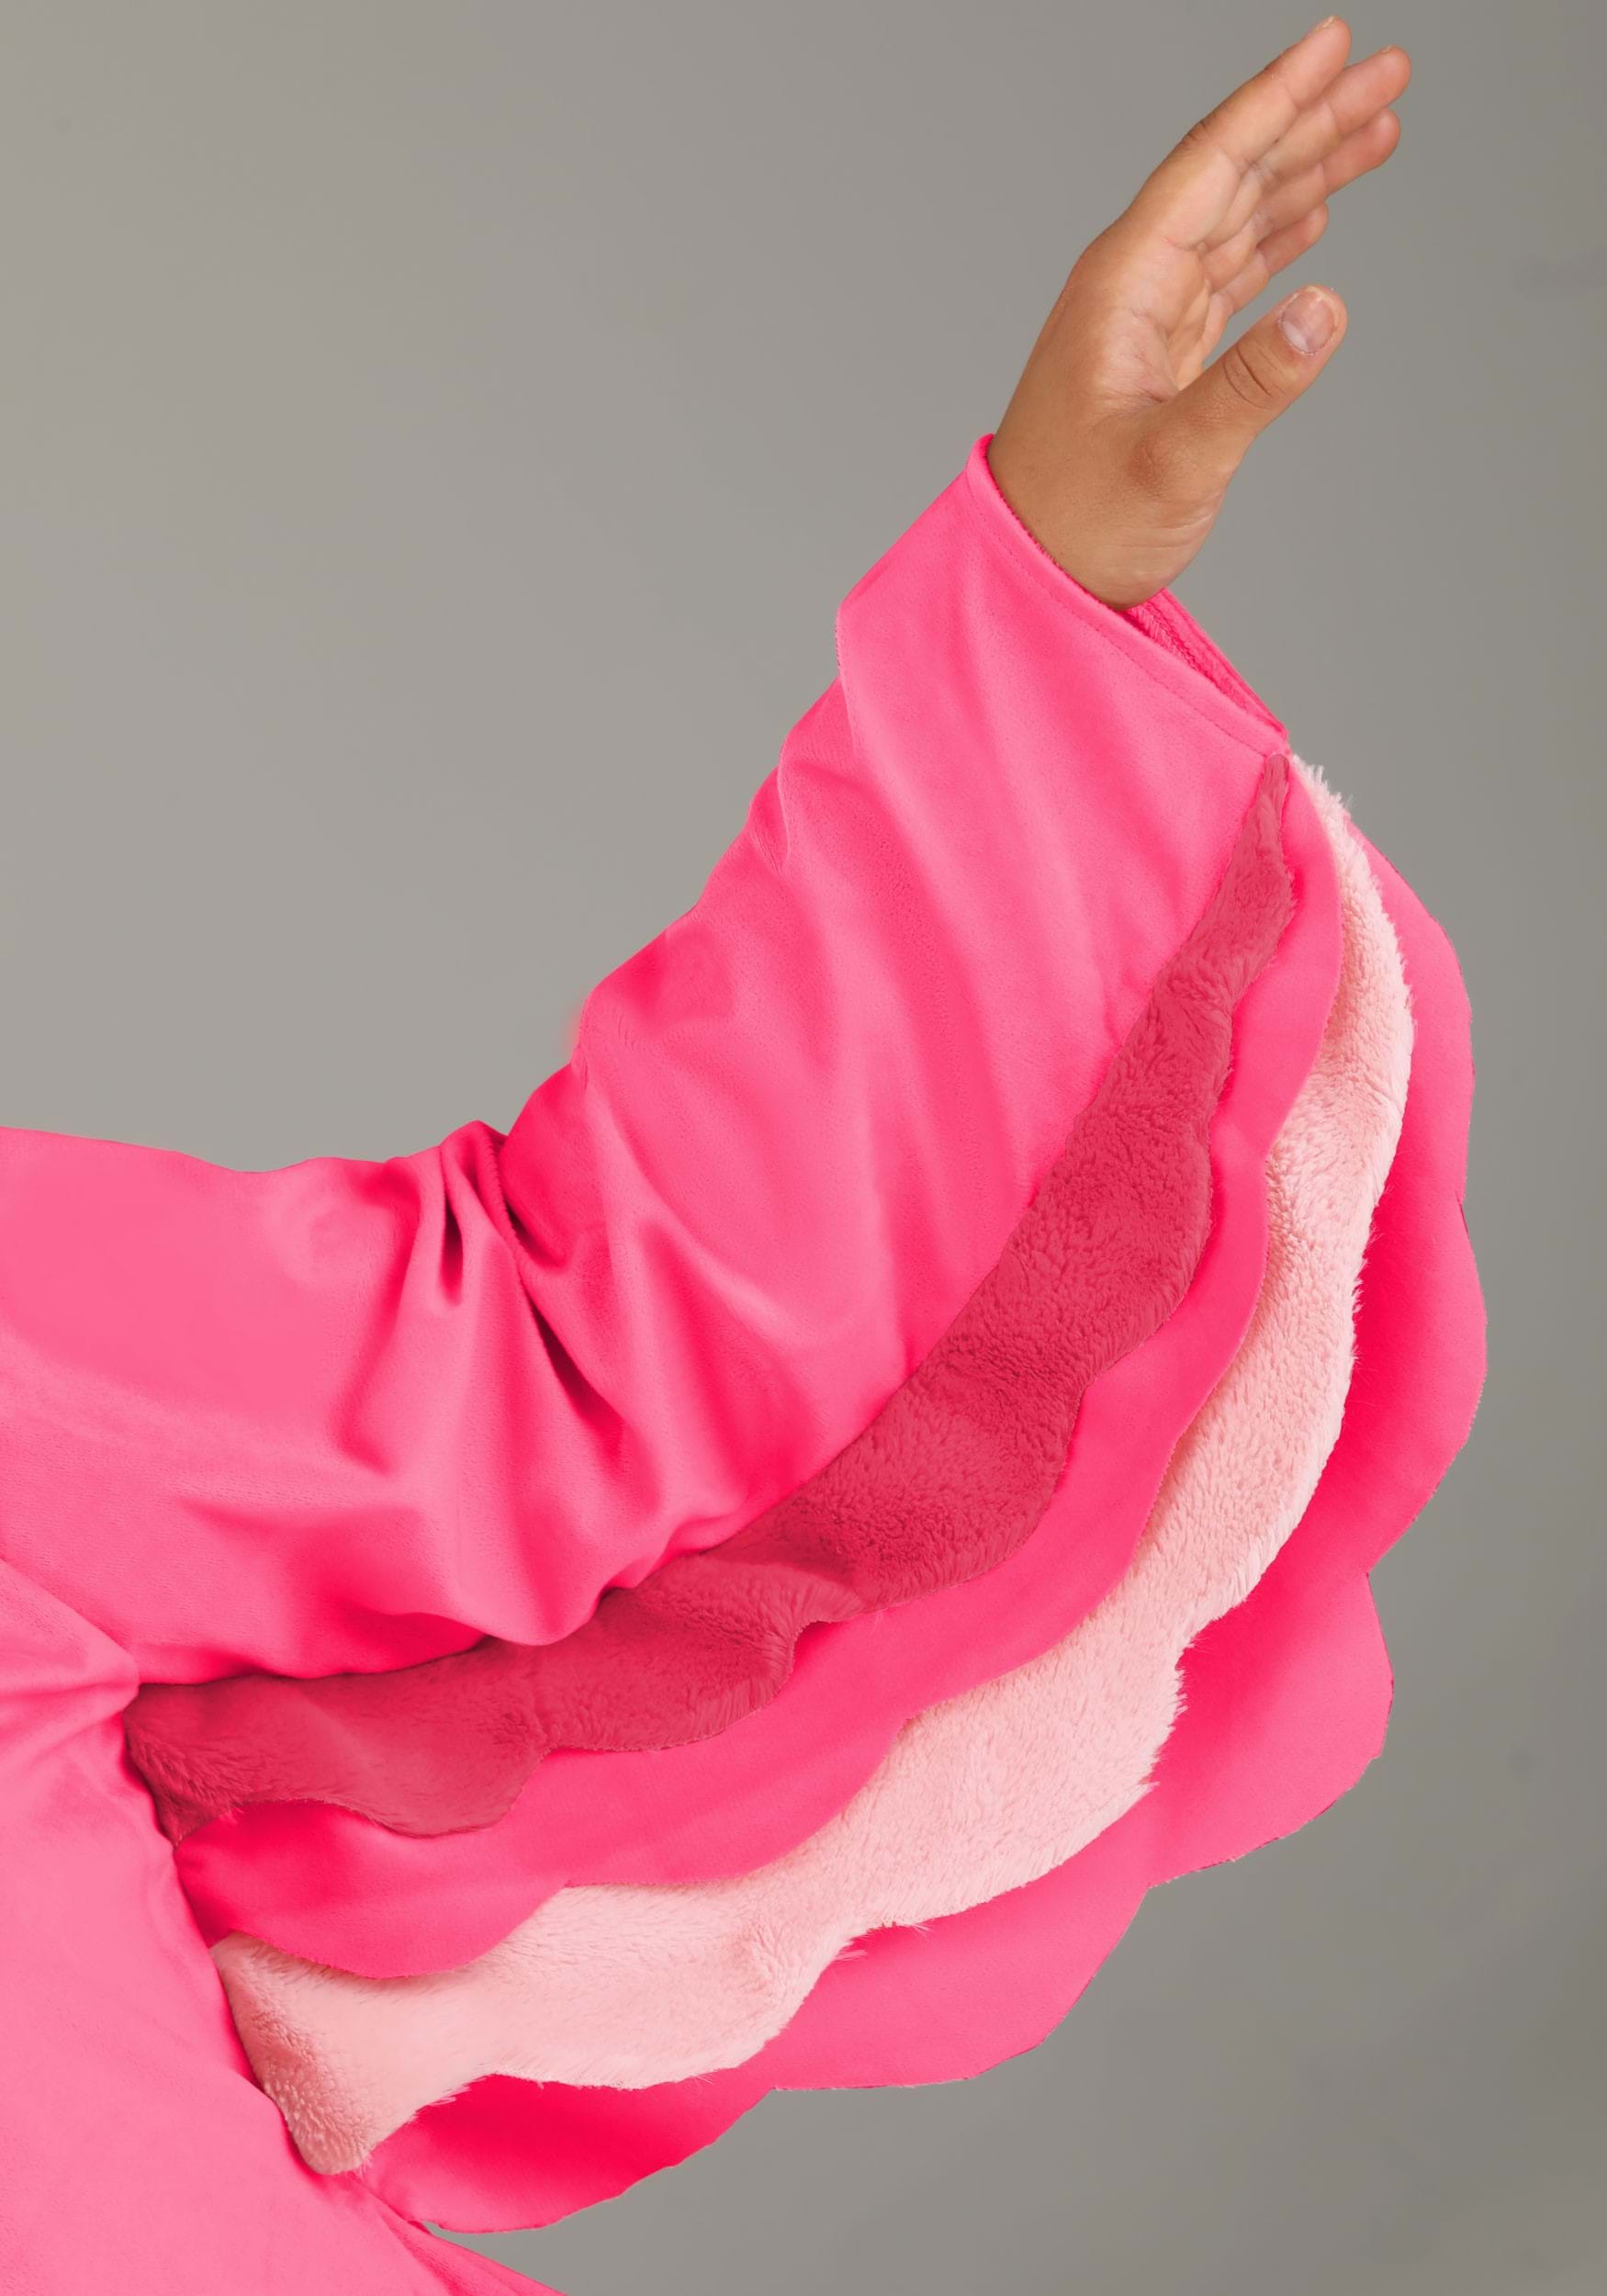 Plus Size Women's Fancy Flamingo Costume Dress